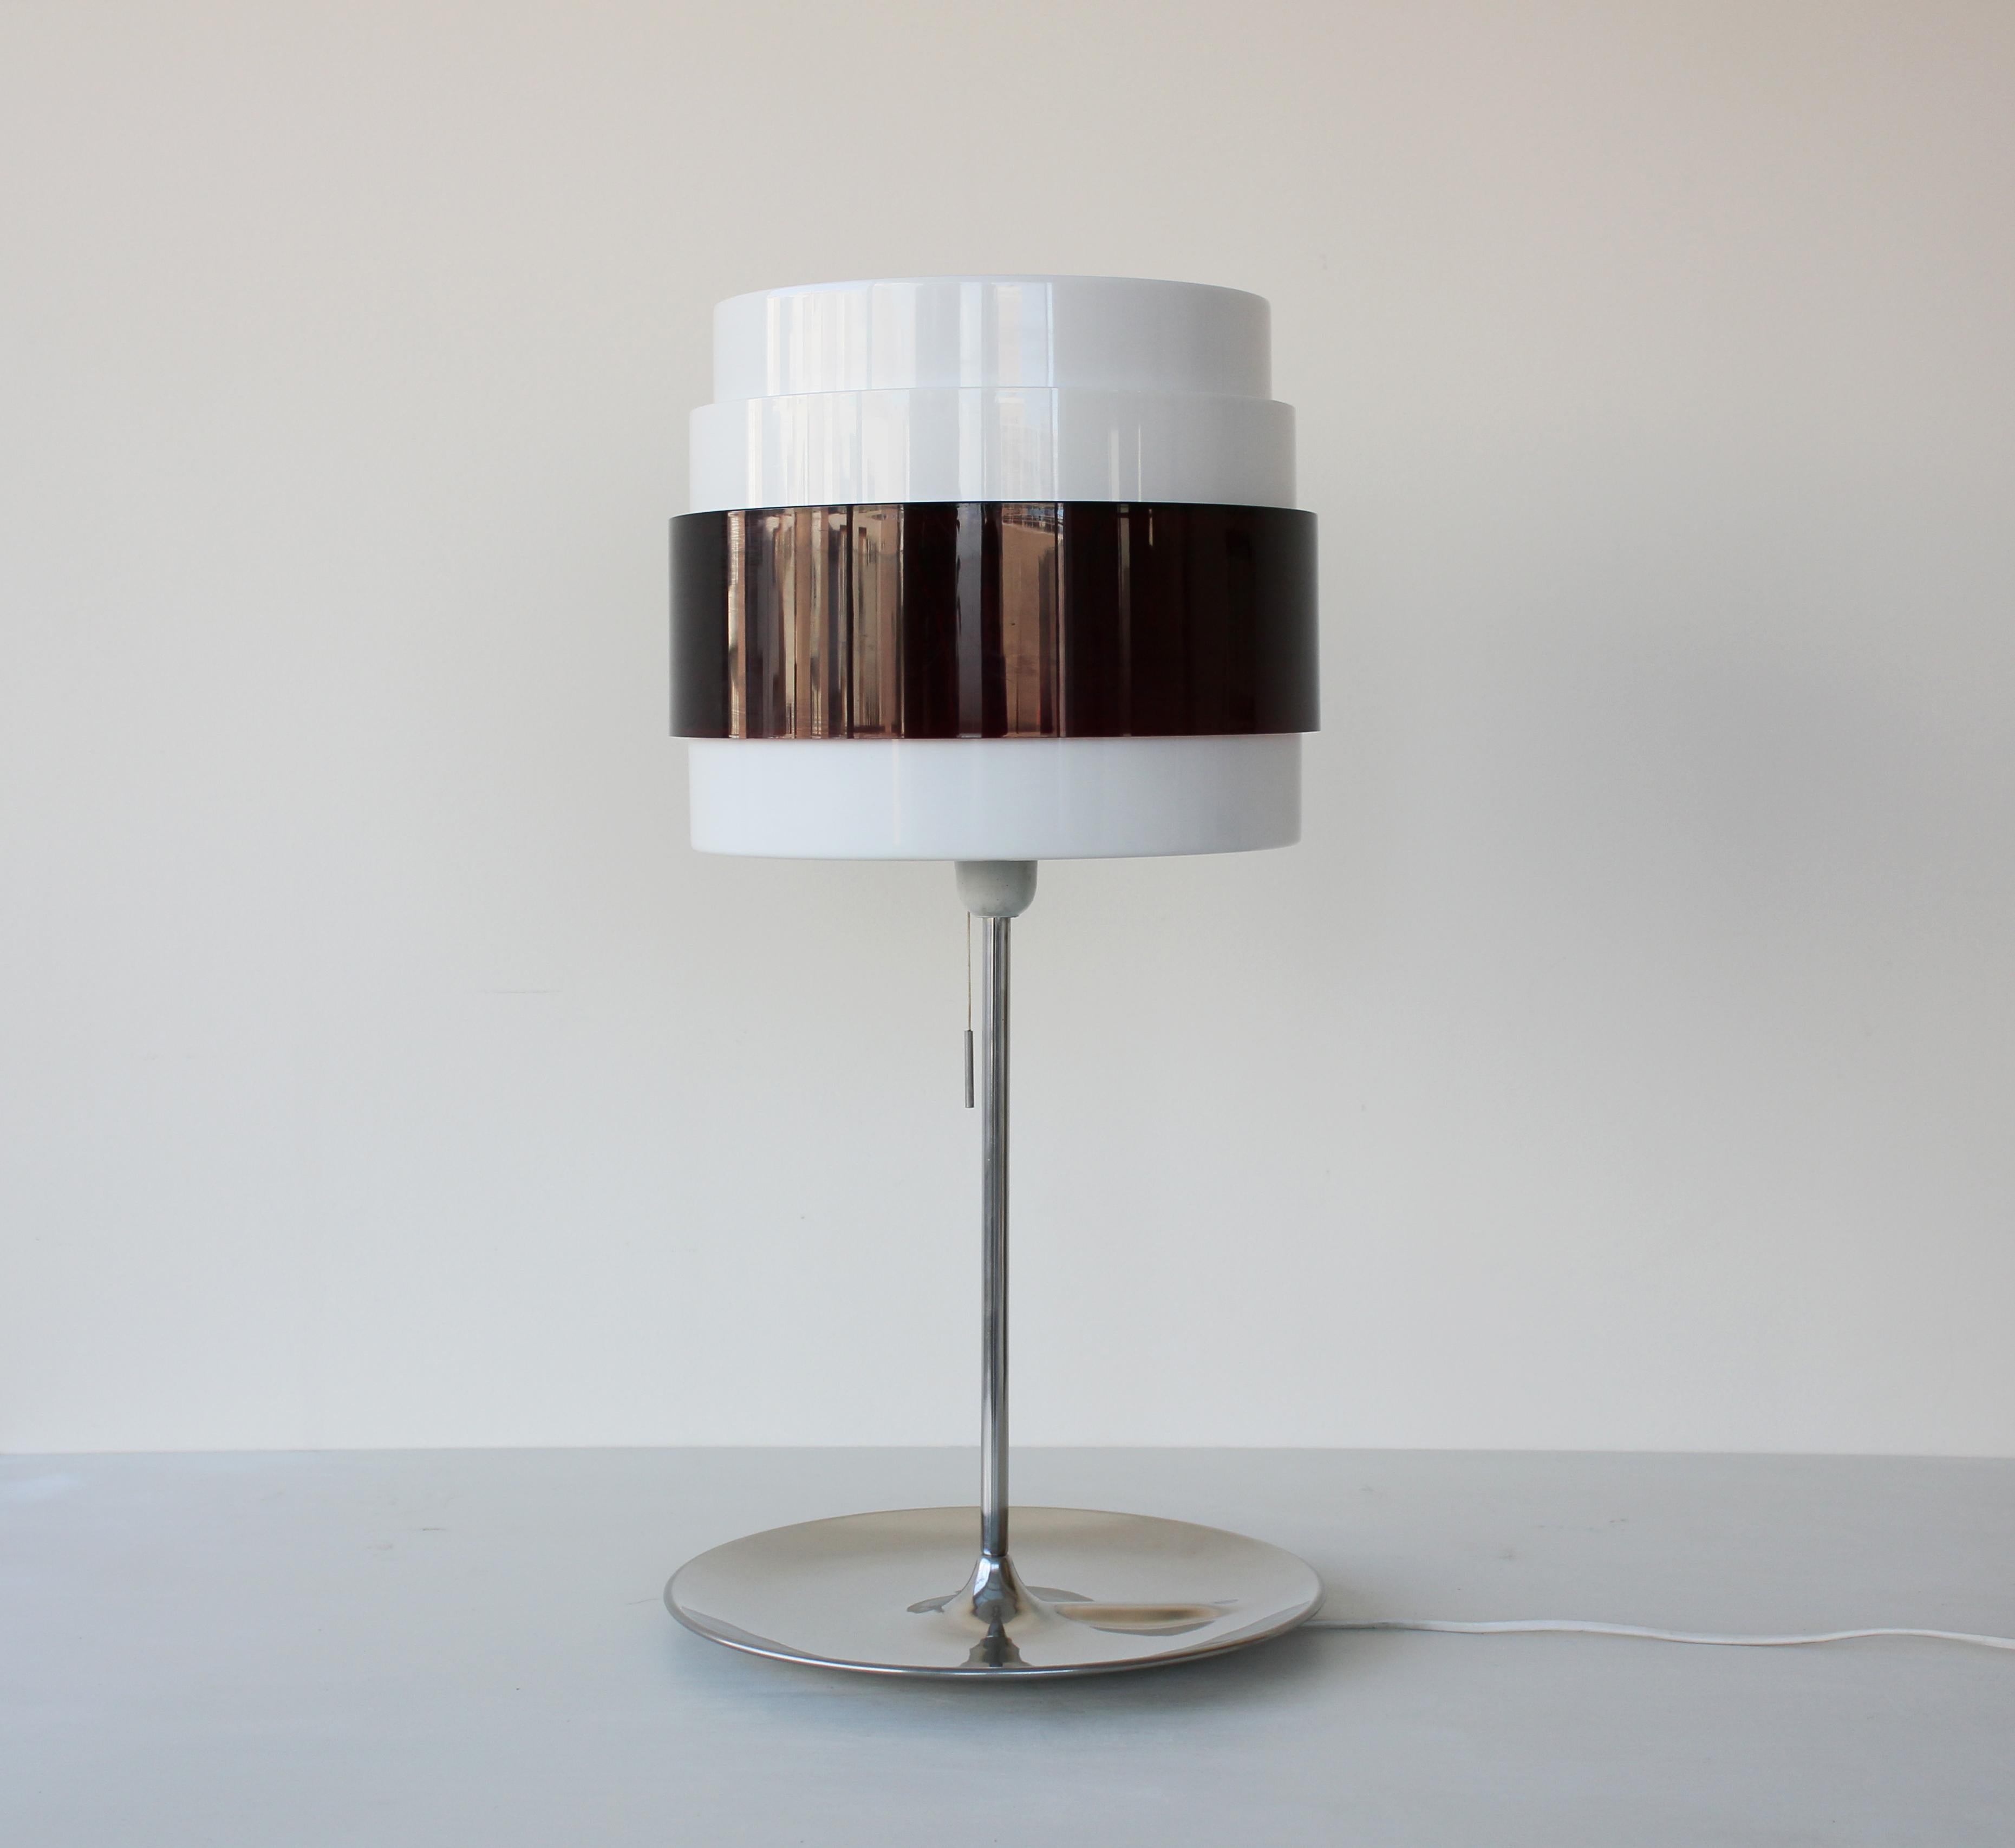 Energy Rock table lamp
Designer: Magnus Elebäck & Carl Öjerstam
Production: Ikea
Origin: Sweden
Period: 2000s
Material: Metal Chrome and plastic
Dimensions: 30 cm diameter x  60 cm high